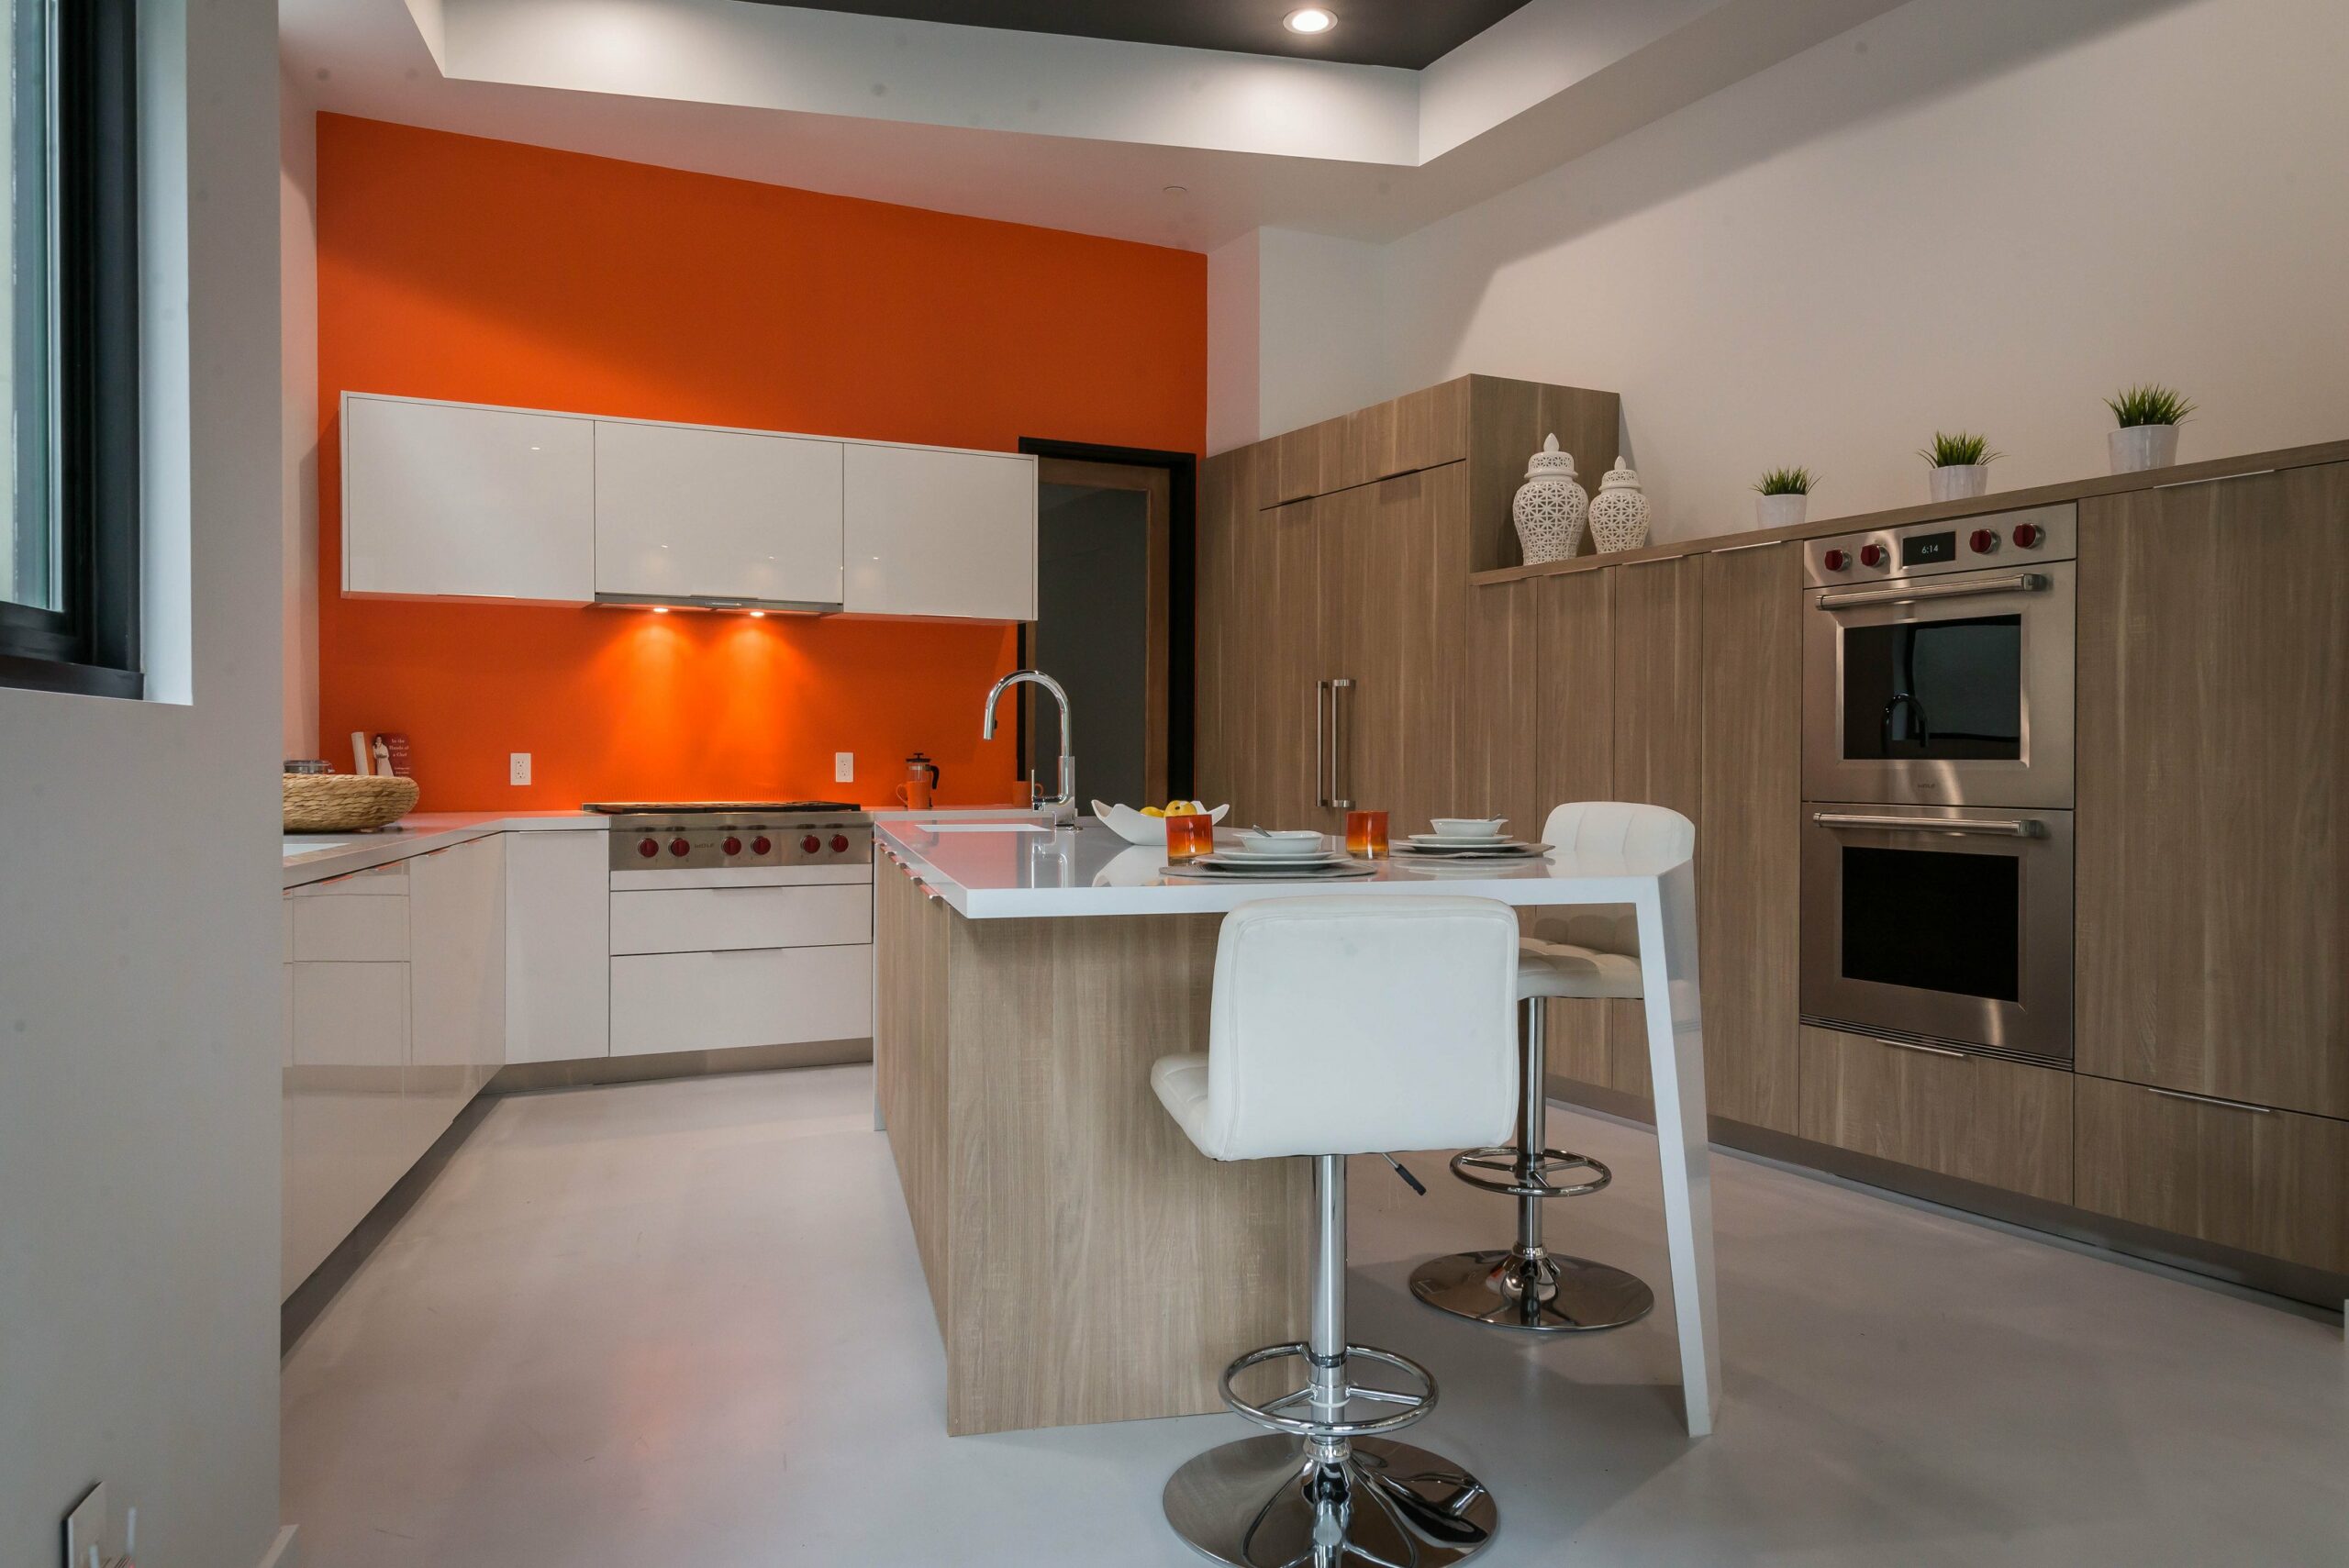 Modern kitchen interior with orange accent wall and breakfast bar.